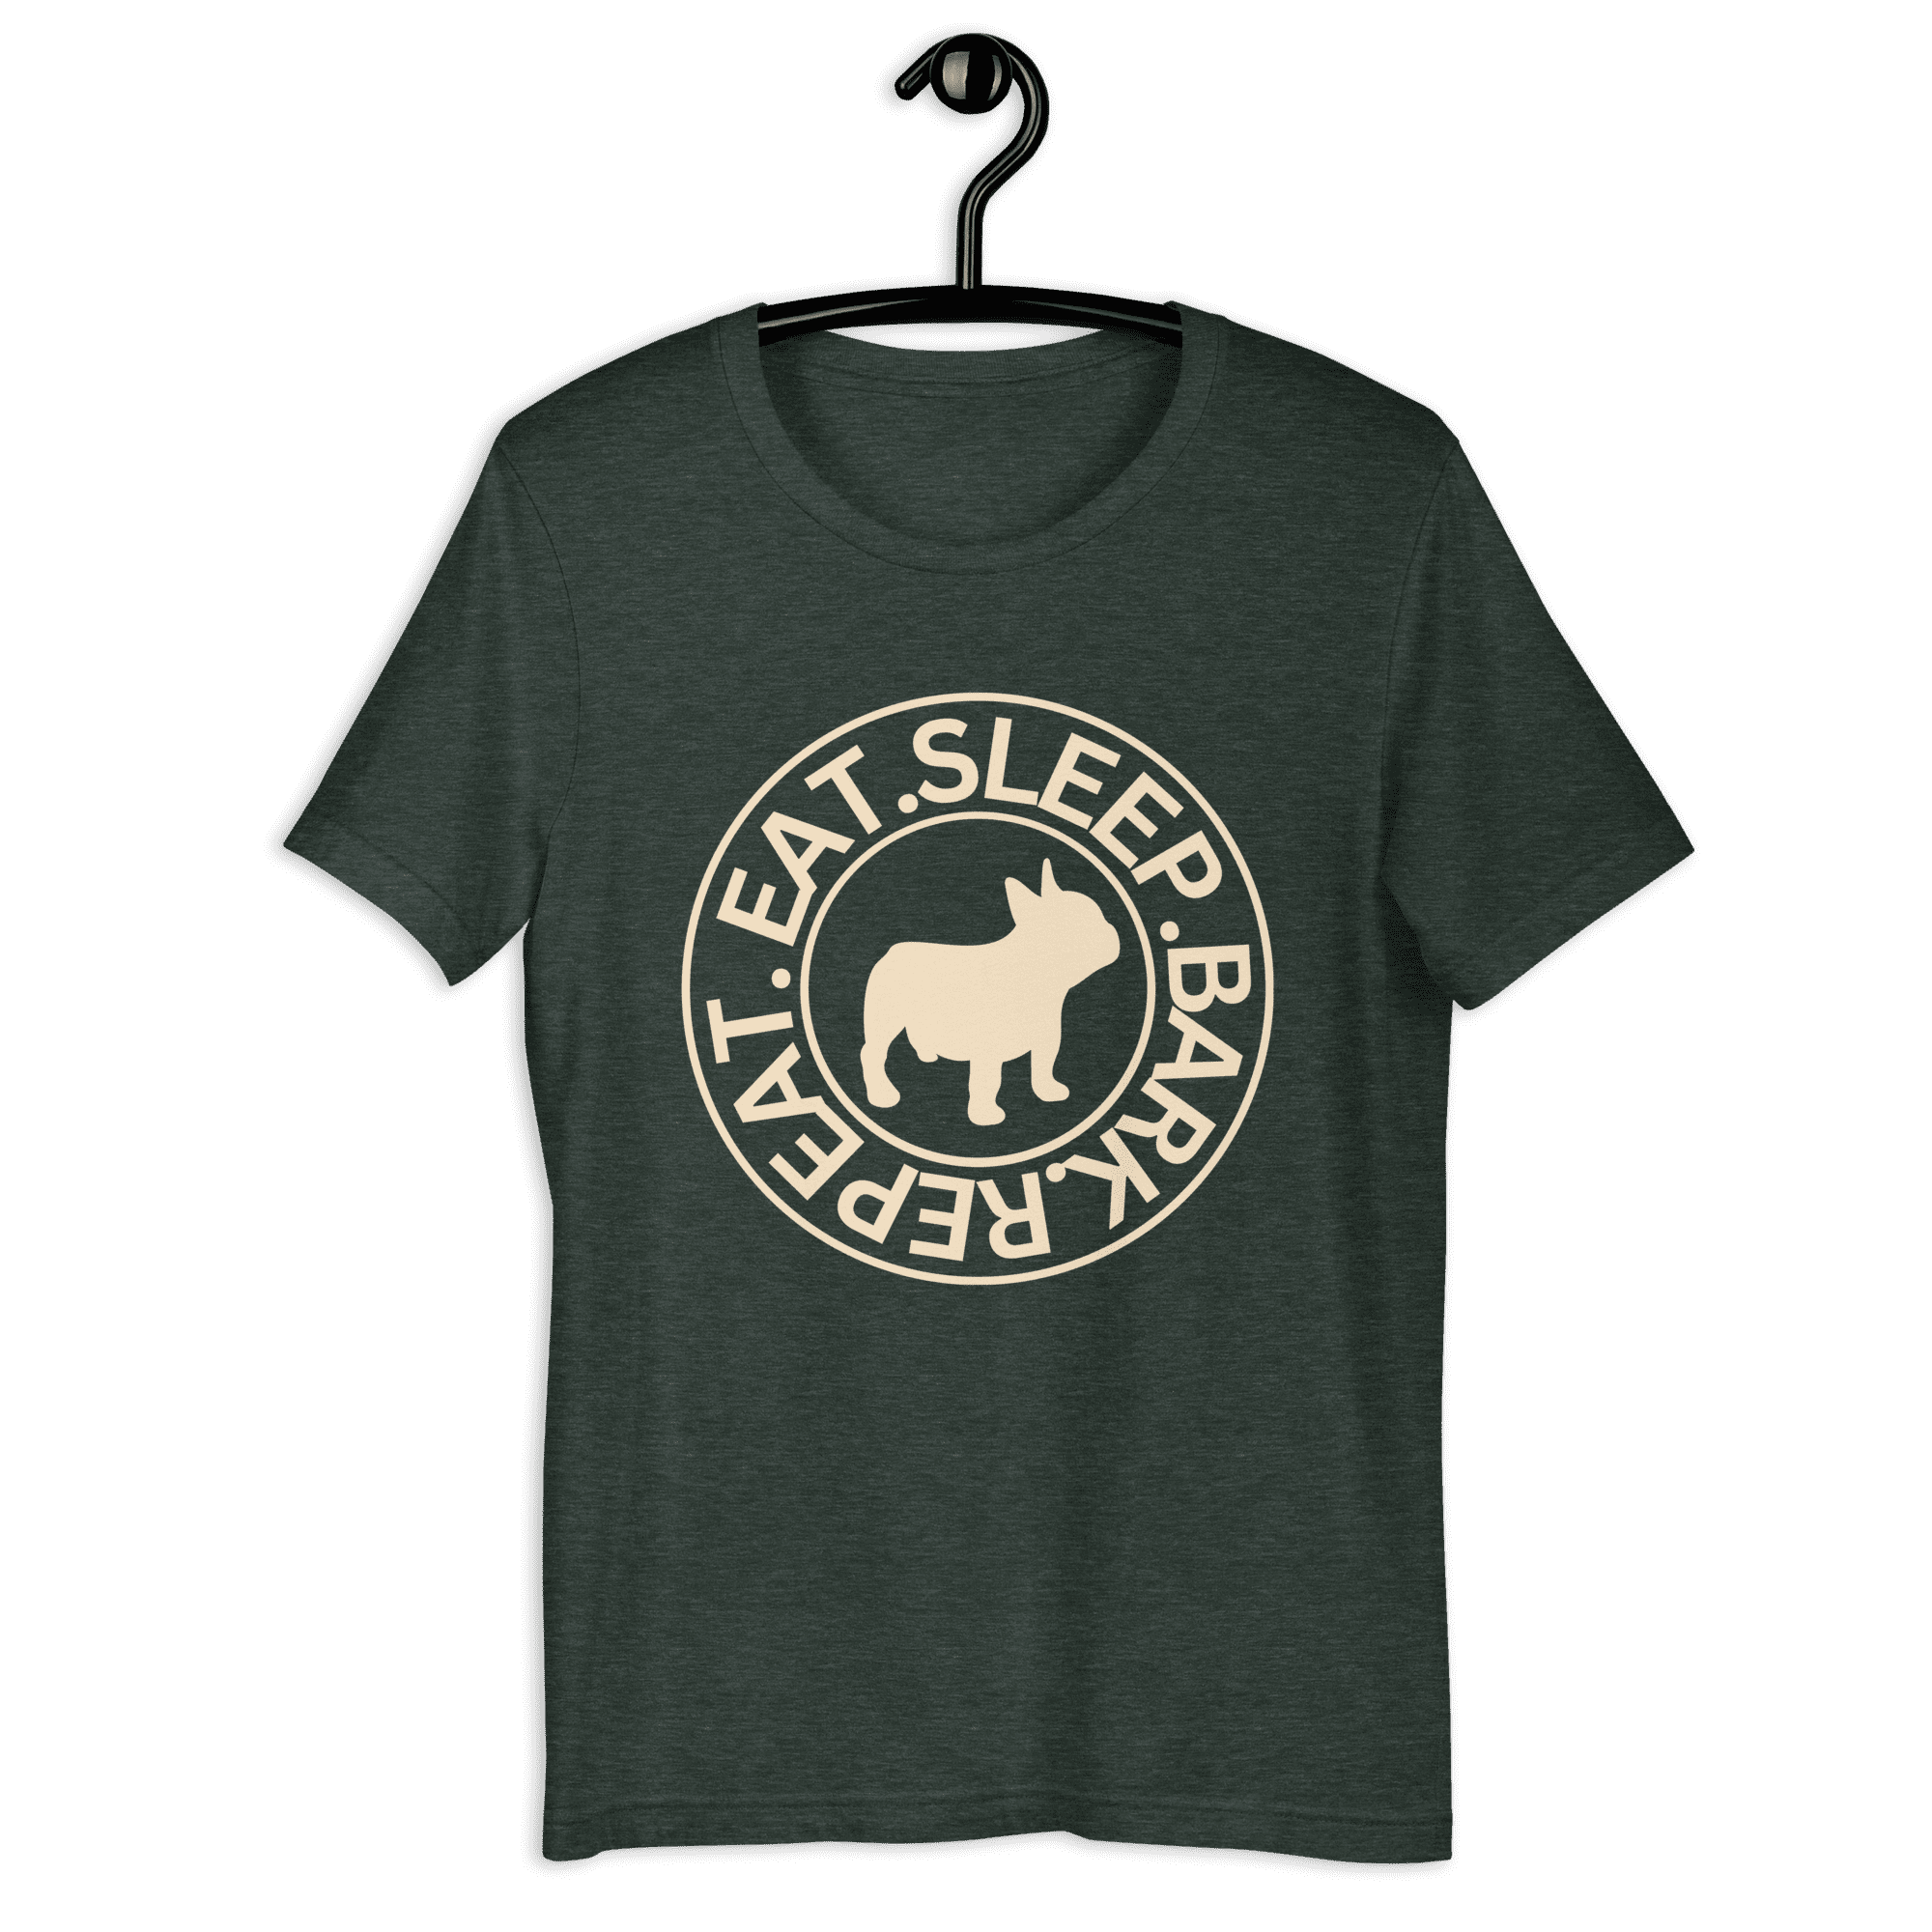 The "Eat Sleep Bark Repeat" French Bulldog Unisex T-Shirt. Grey